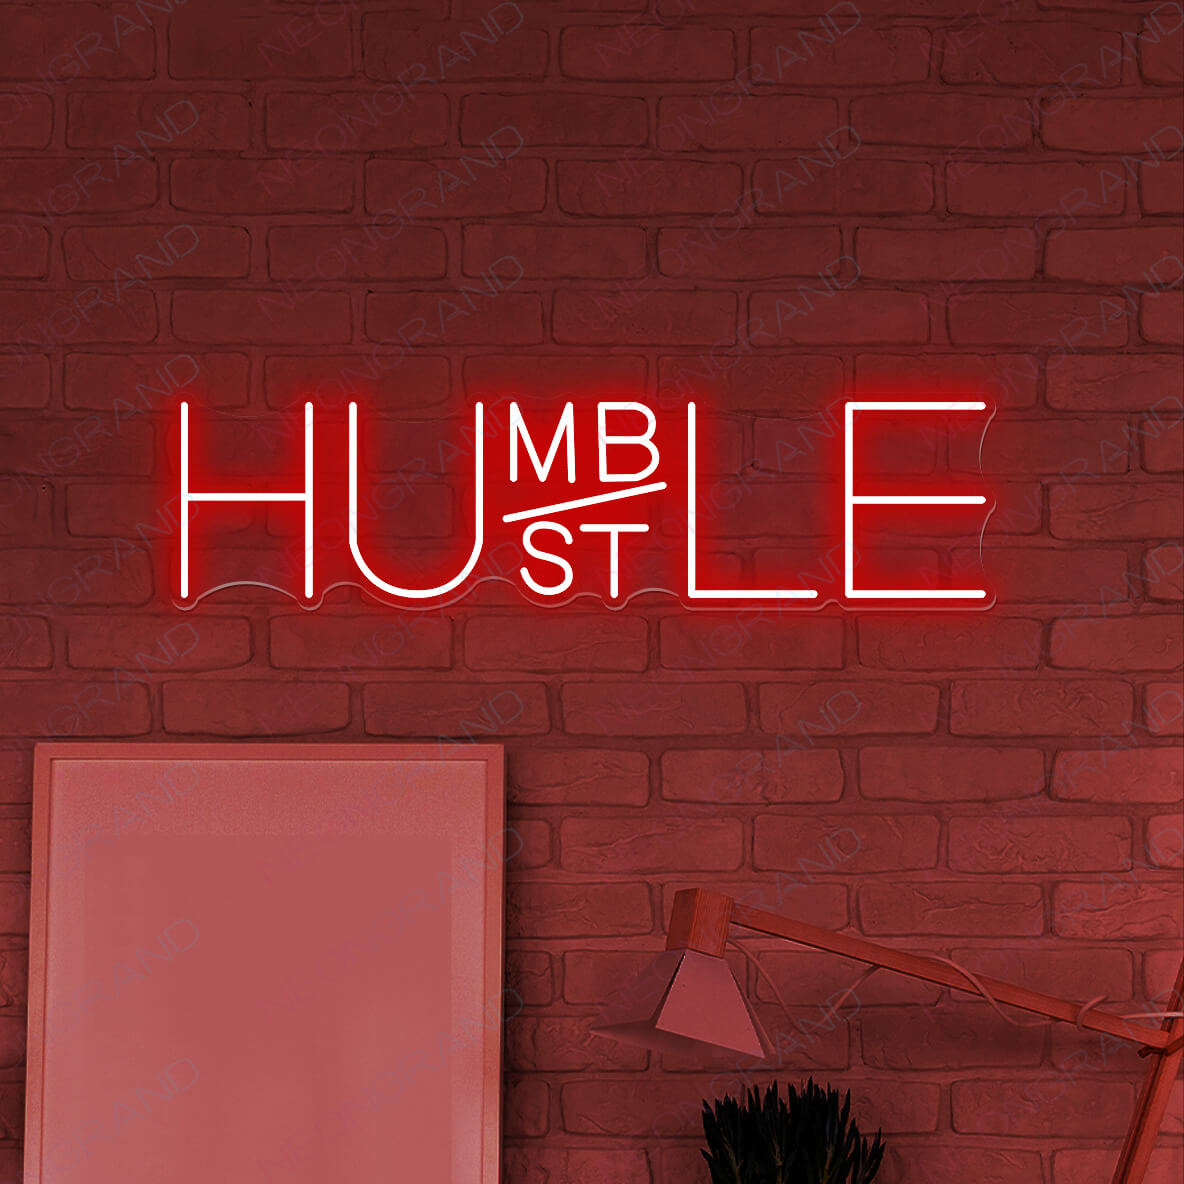 Hustle Neon Sign Humble Hustle Led Light red